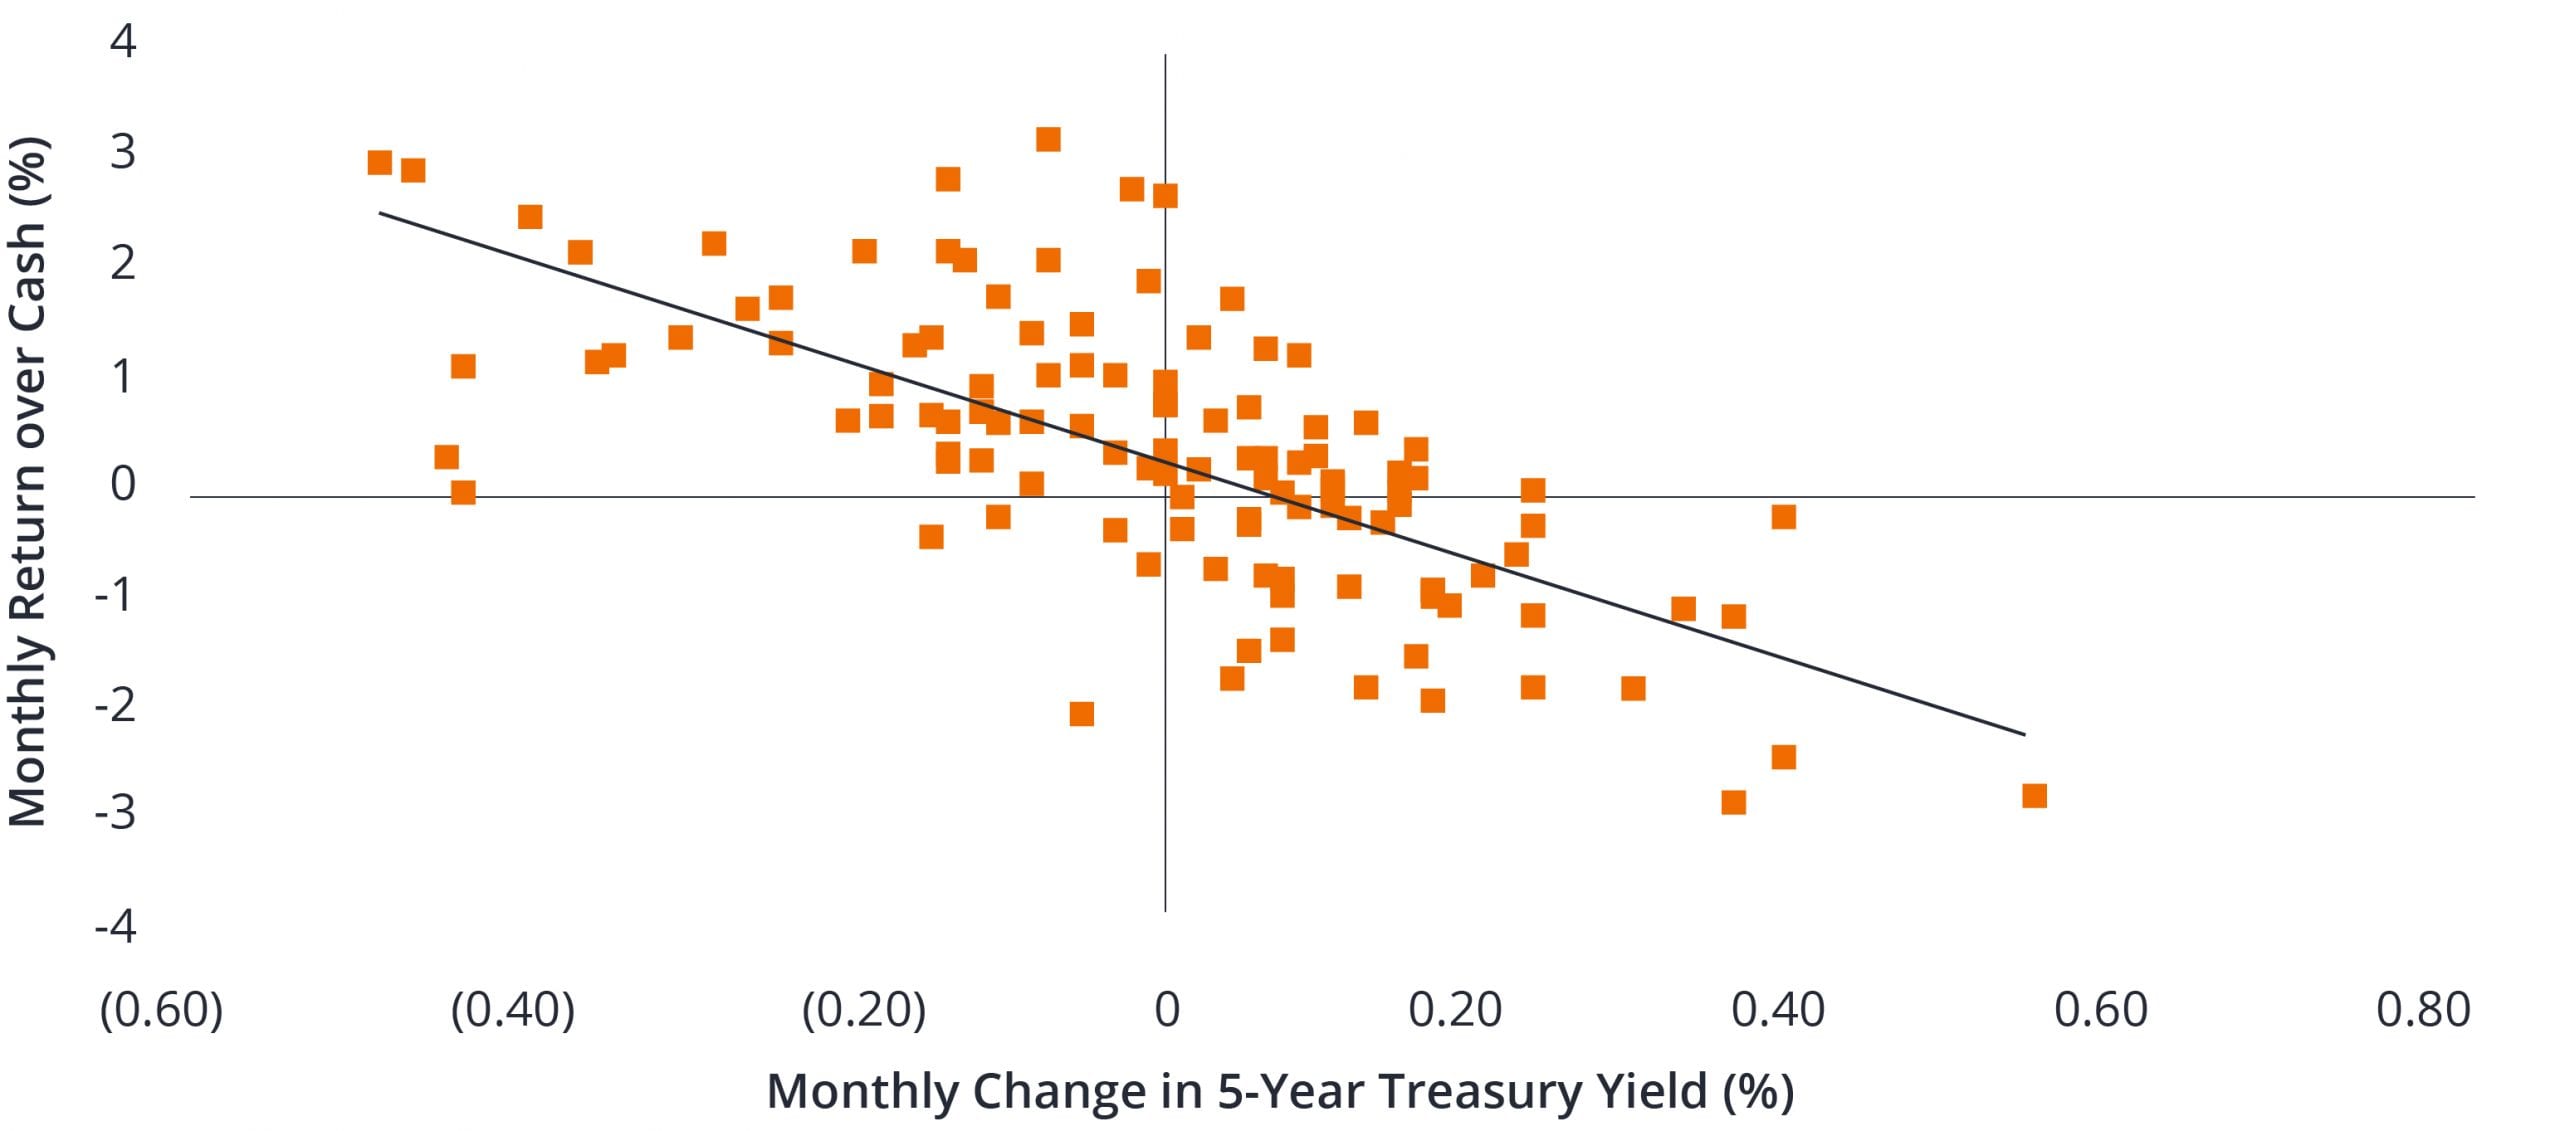 U.S. Treasury yield changes versus corporate bond returns